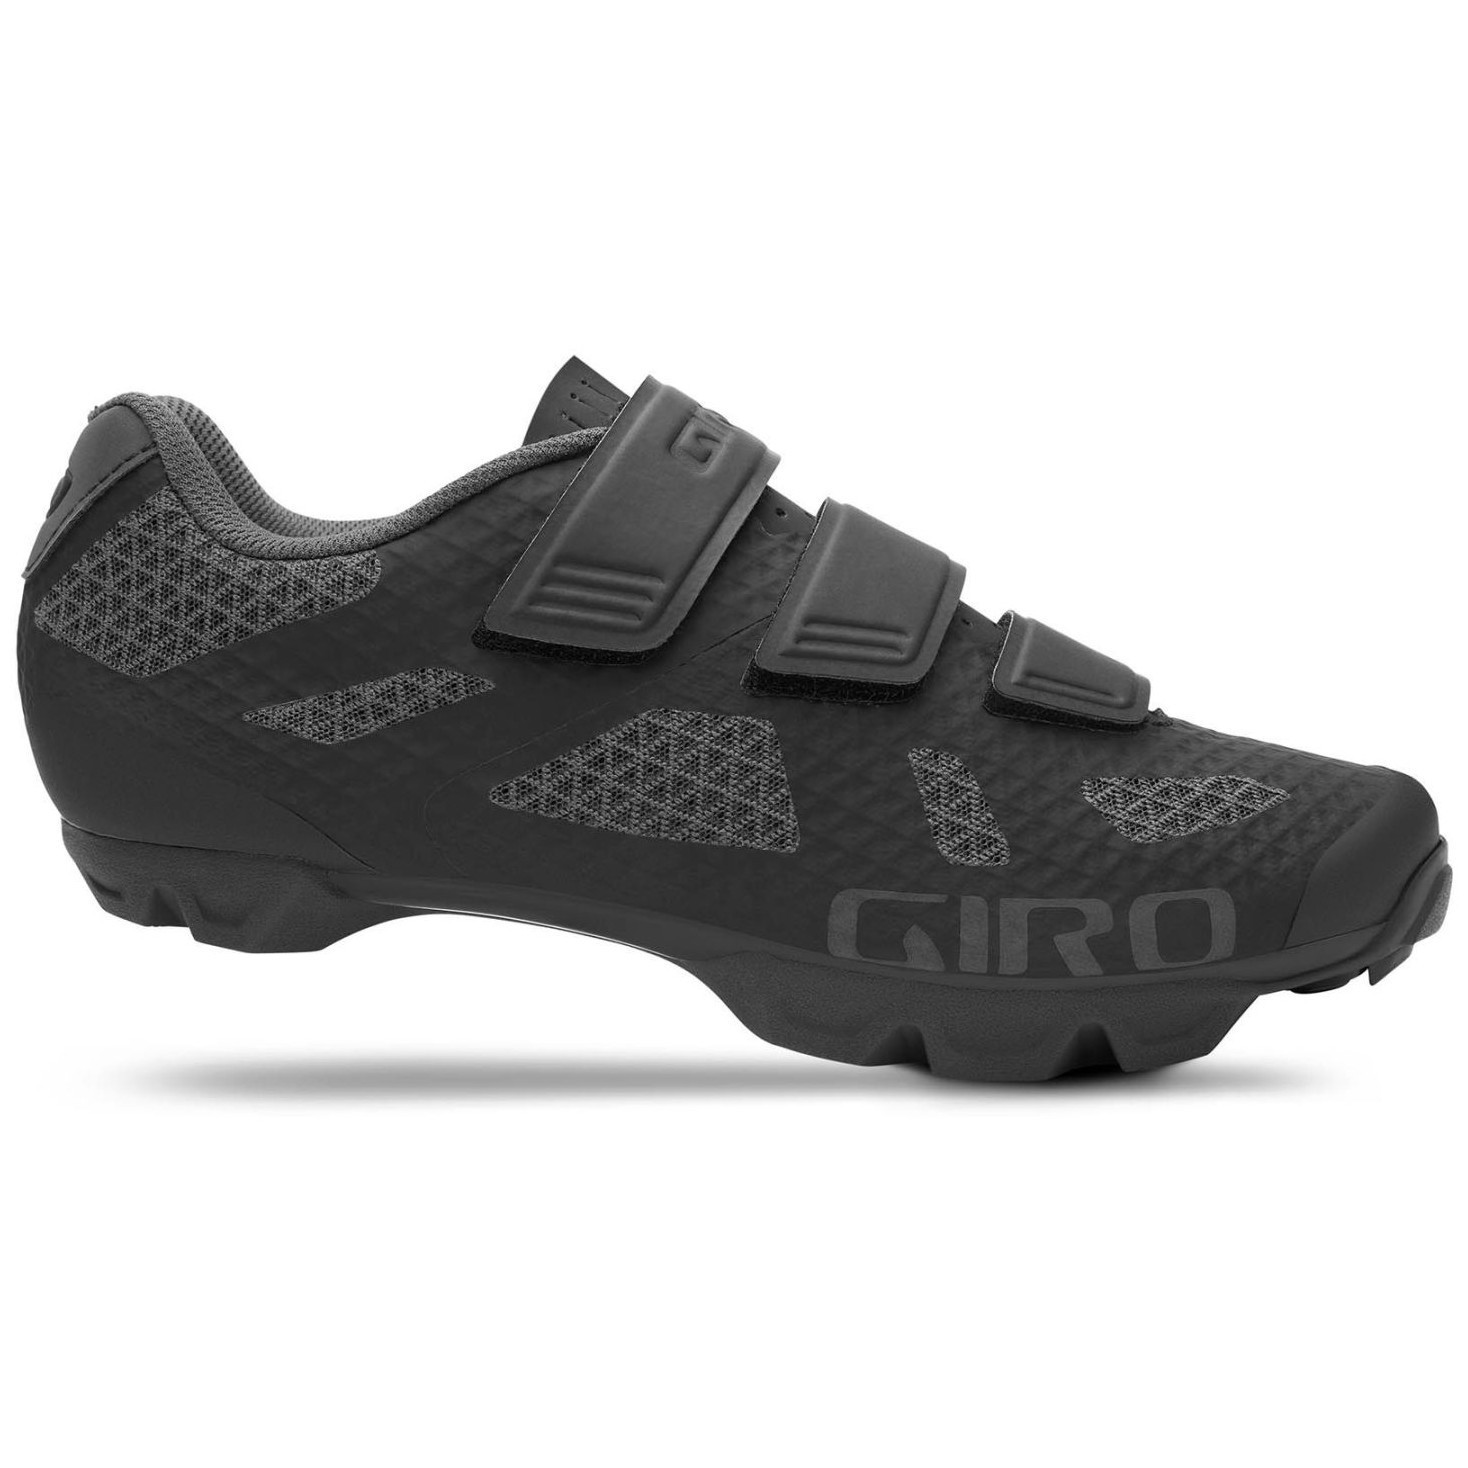 Dámské cyklistické tretry Giro Ranger W Velikost bot (EU): 38 / Barva: černá